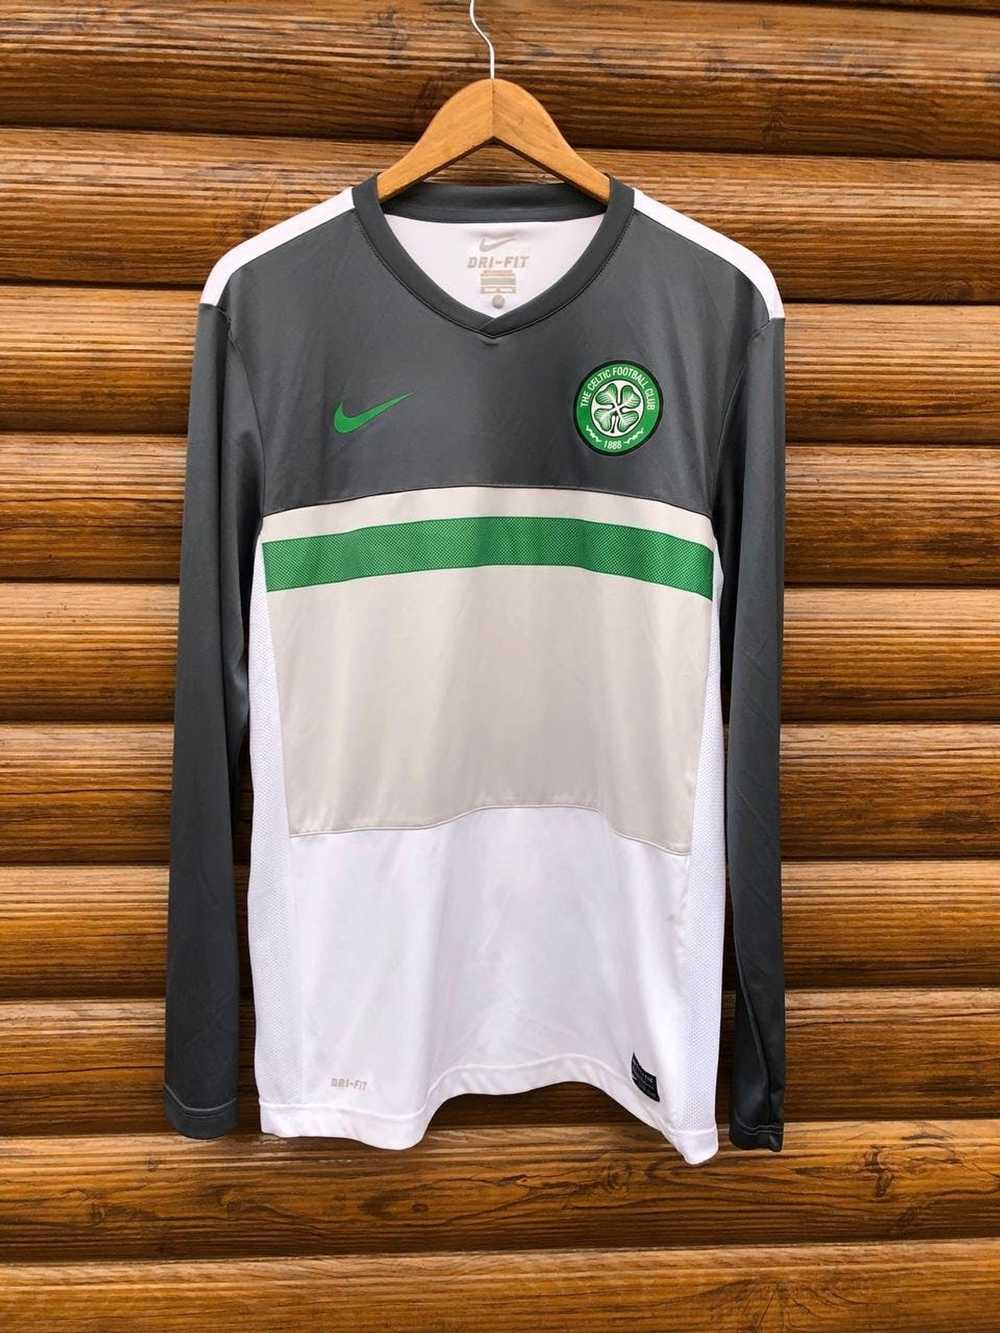 Maglia Celtic 2013-2014 Nike novità le hoops verdi divise in 7 righe